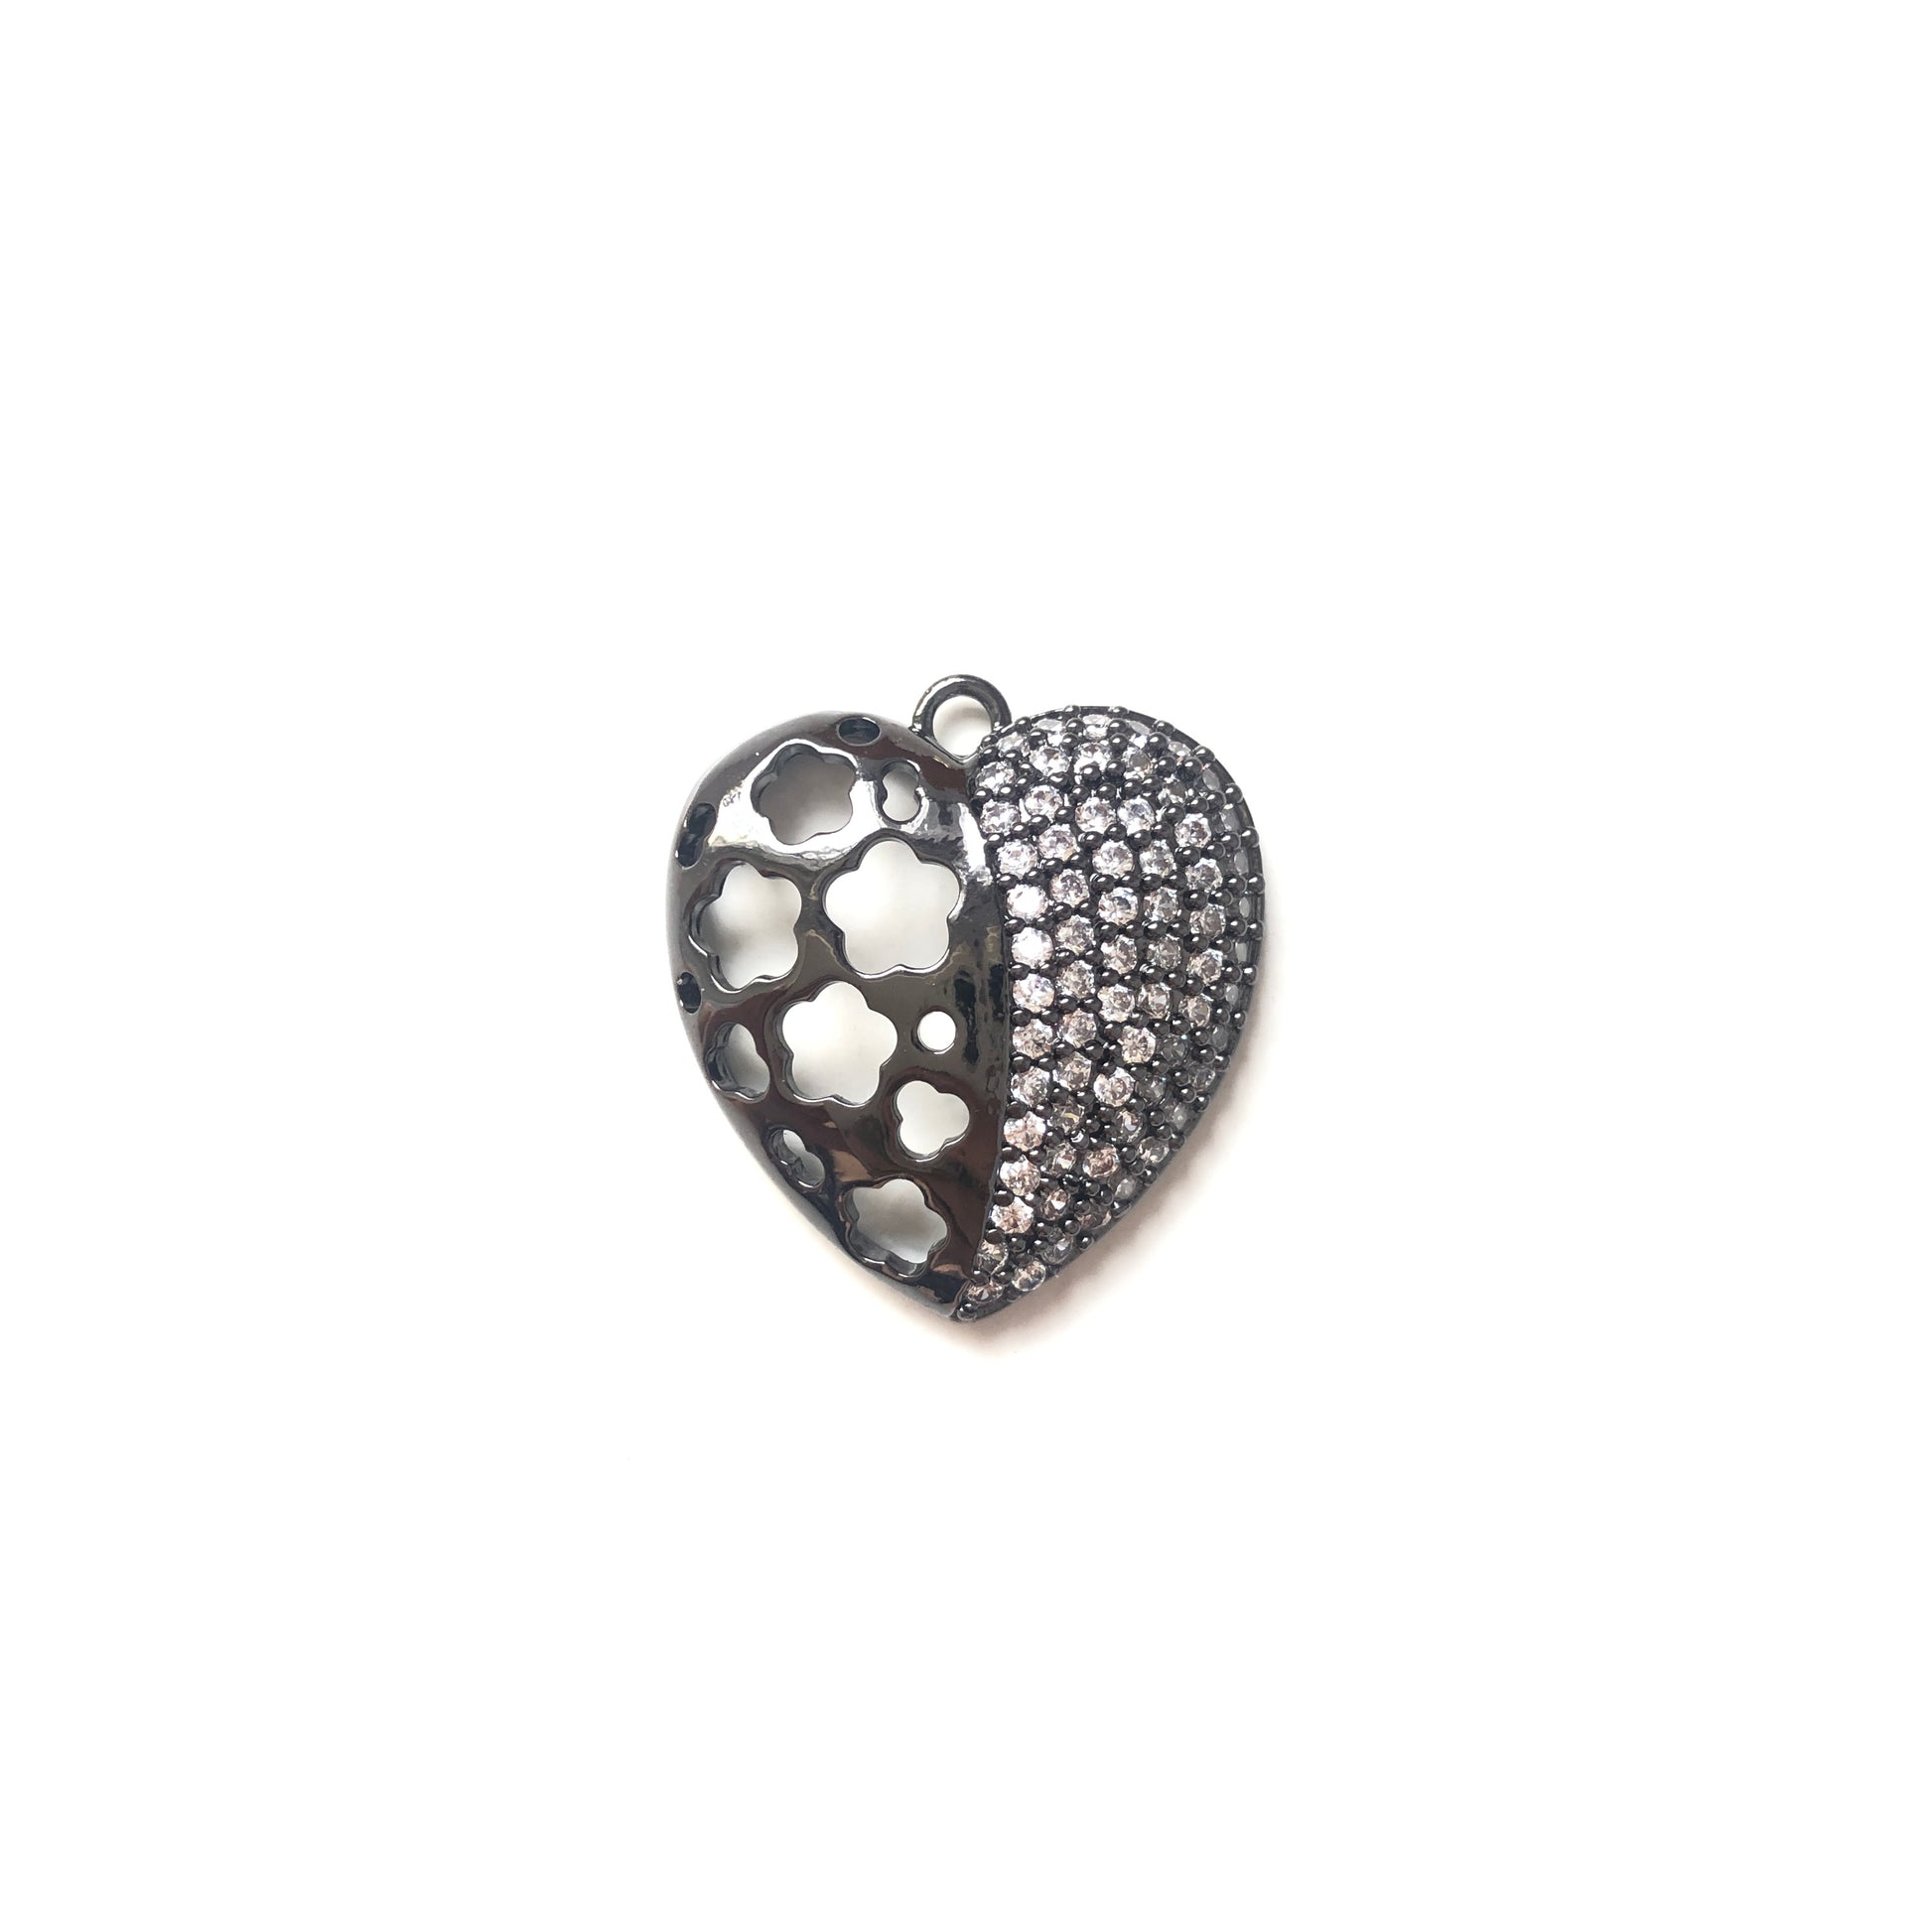 10pcs/lot 24.3*22.8mm CZ Paved Hollow Heart Charms Black CZ Paved Charms Hearts On Sale Charms Beads Beyond